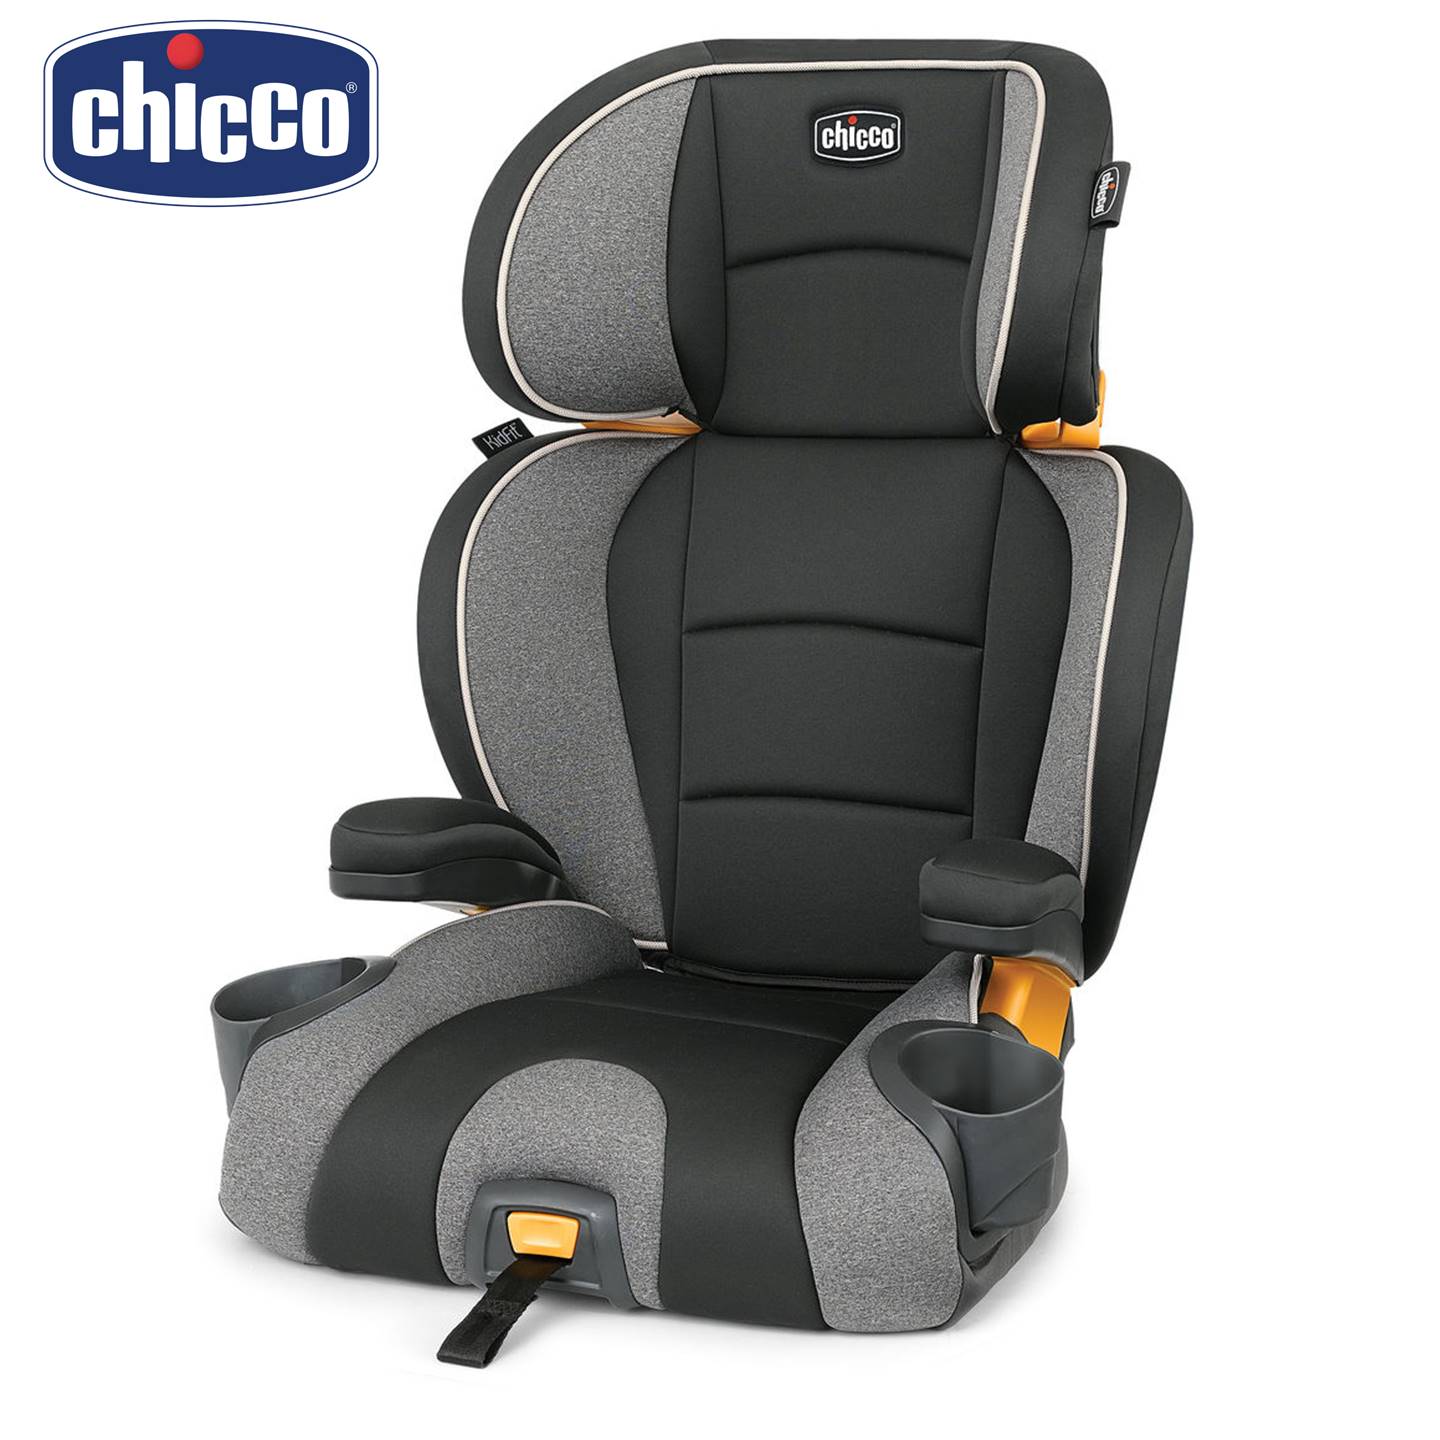 Chicco Kidfit Car Seat